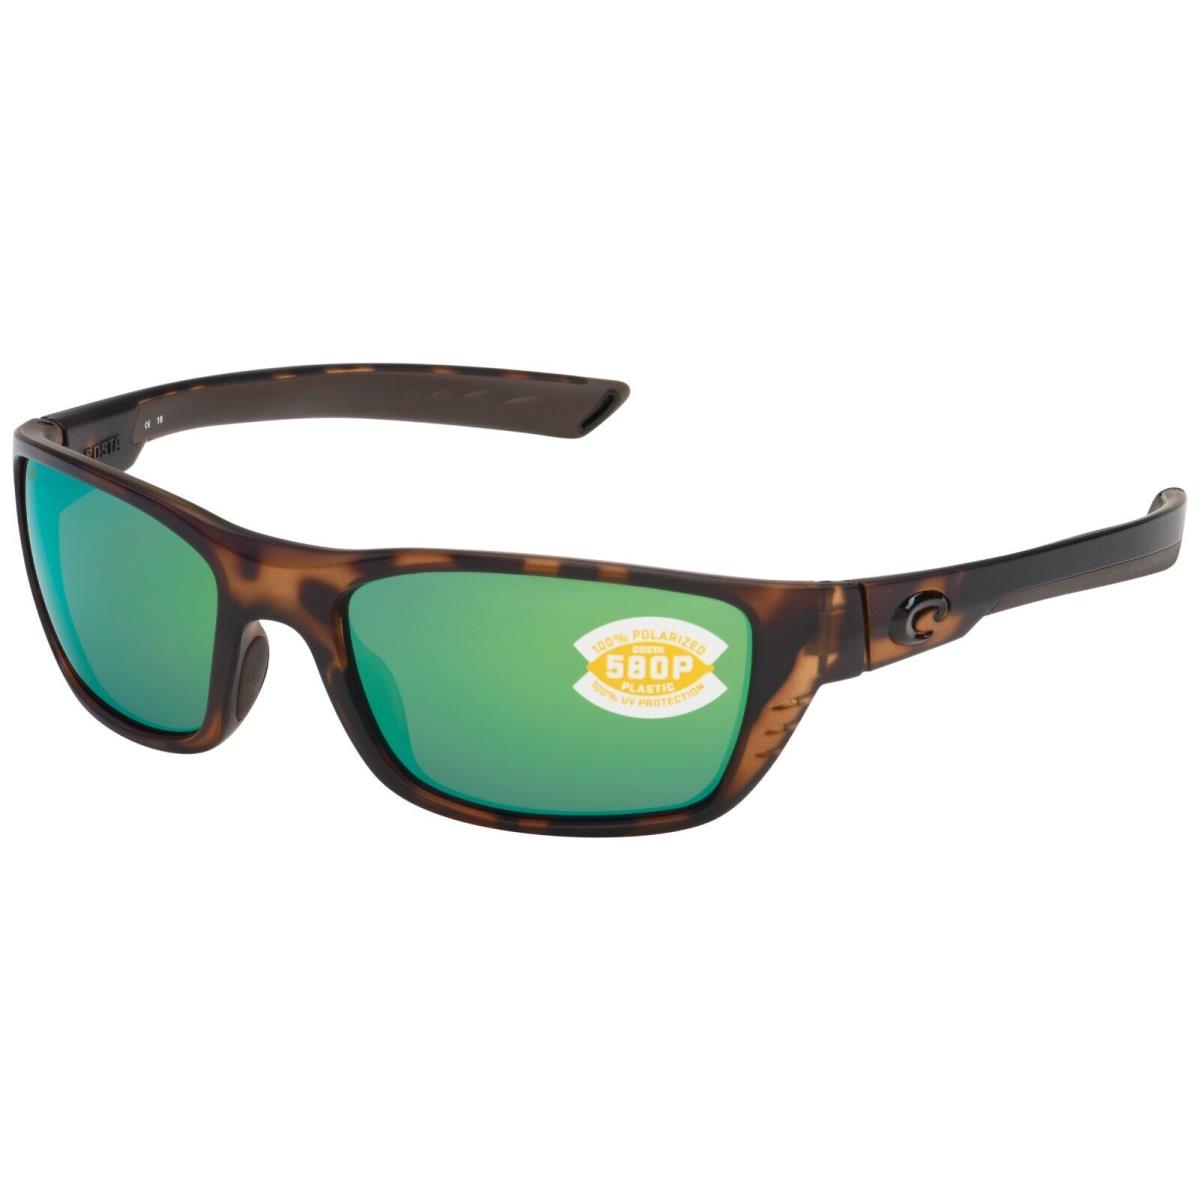 Costa Del Mar Wtp 66 Ogmp Whitetip Sunglasses Green Mirror 580P Polarized 58mm - Frame: , Lens: Green